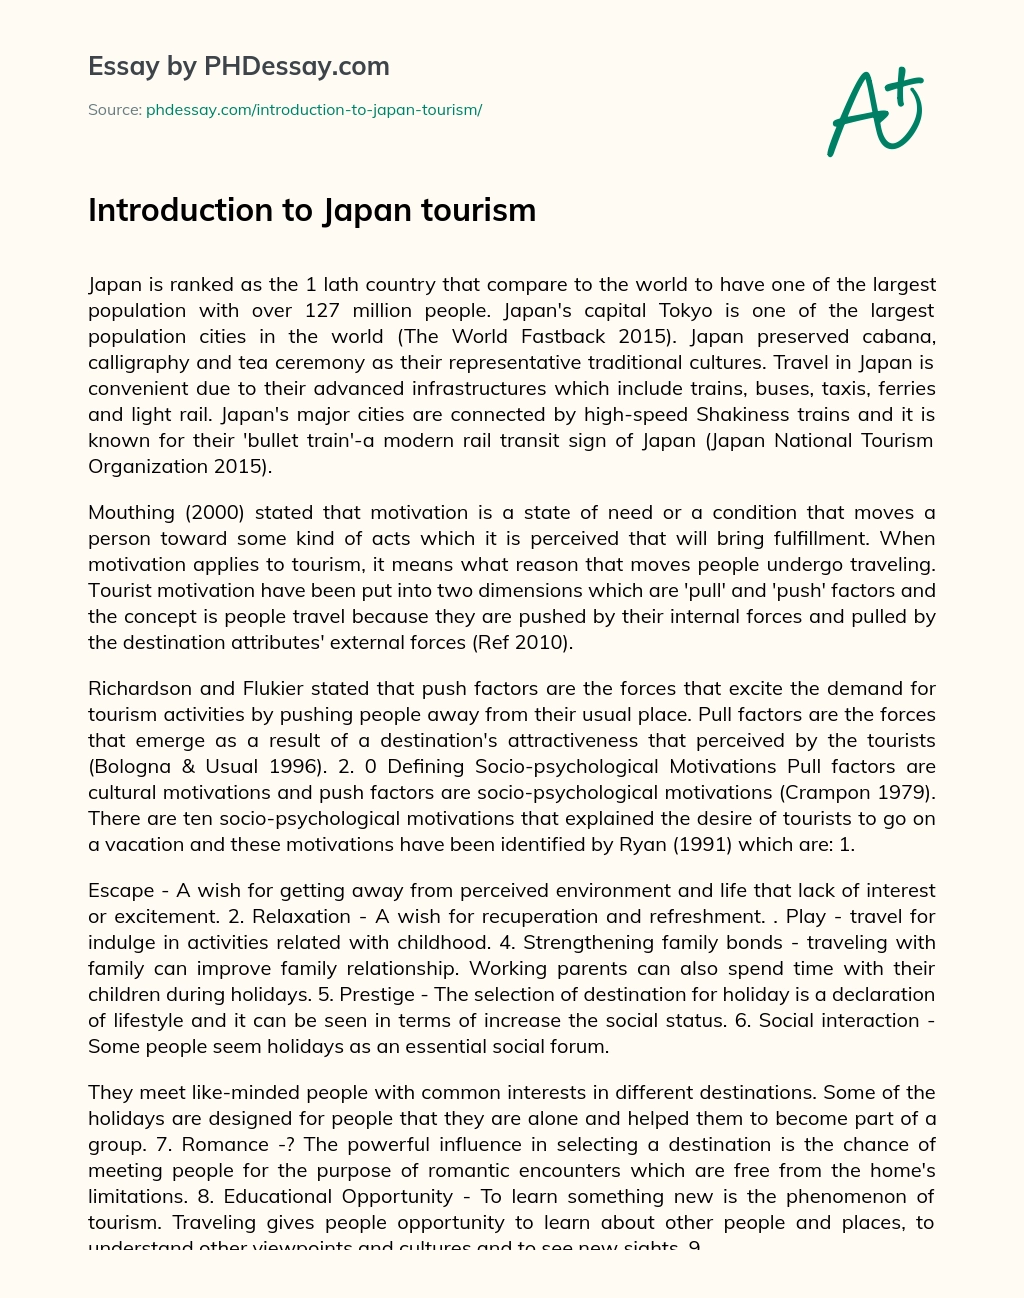 Introduction to Japan tourism essay